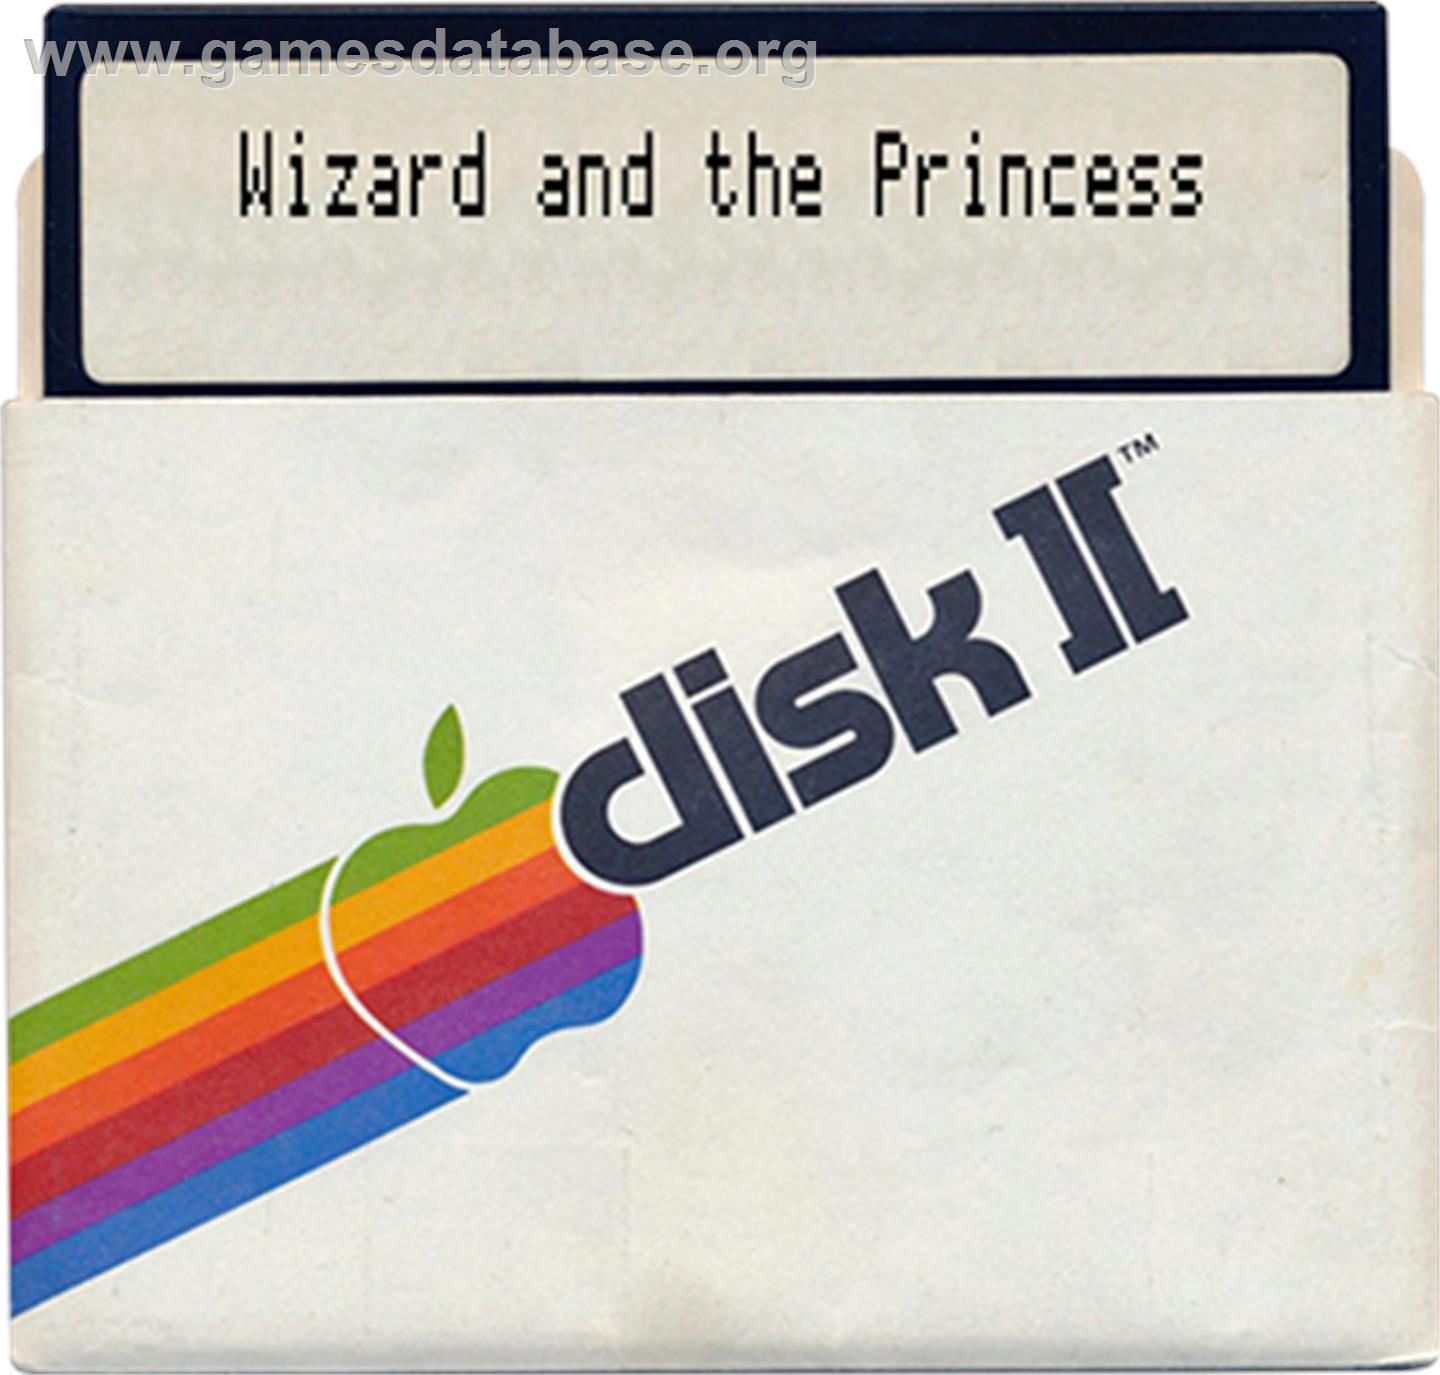 Wizard and the Princess: Hi-Res Adventure #2 - Apple II - Artwork - Disc